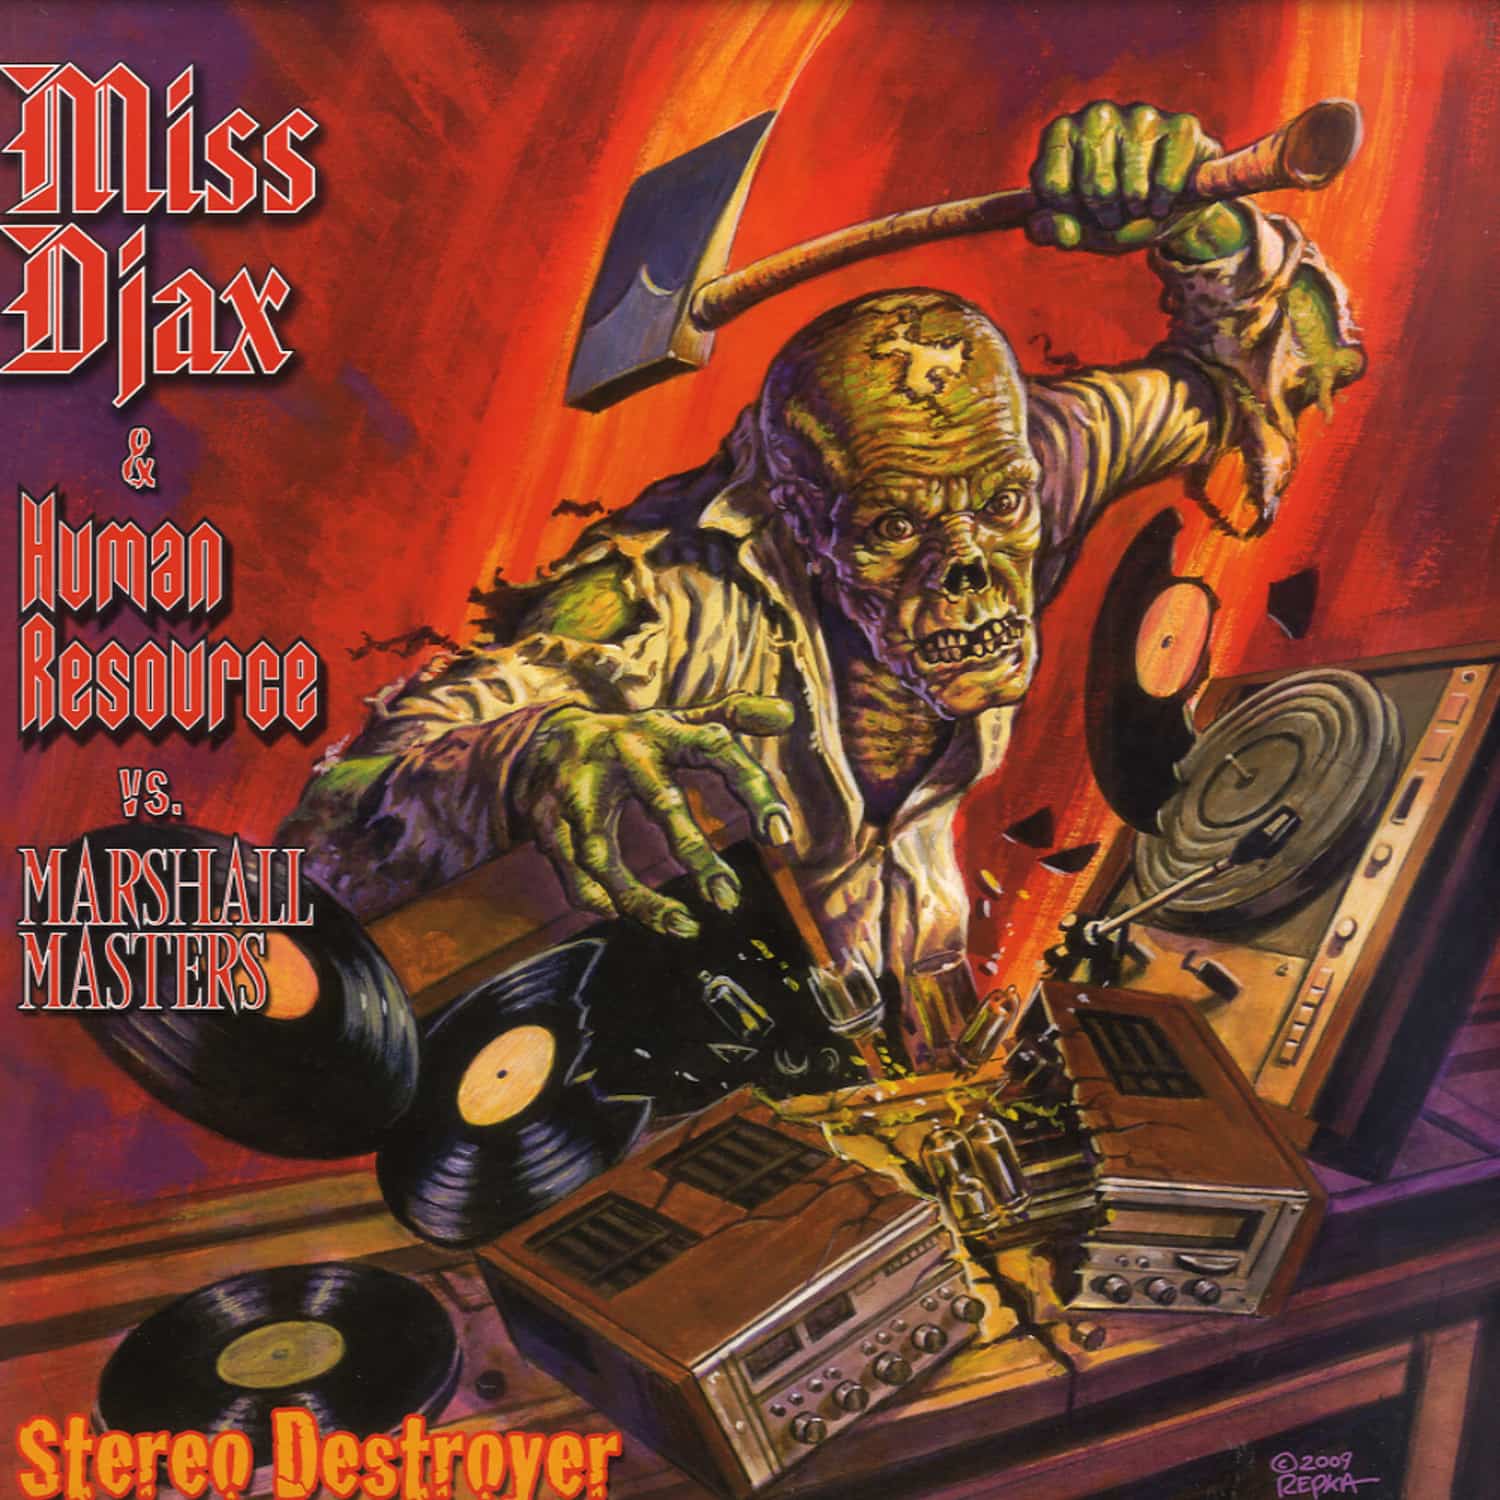 Miss Djax & Human Resource vs. Marshall Masters - STEREO DESTROYER